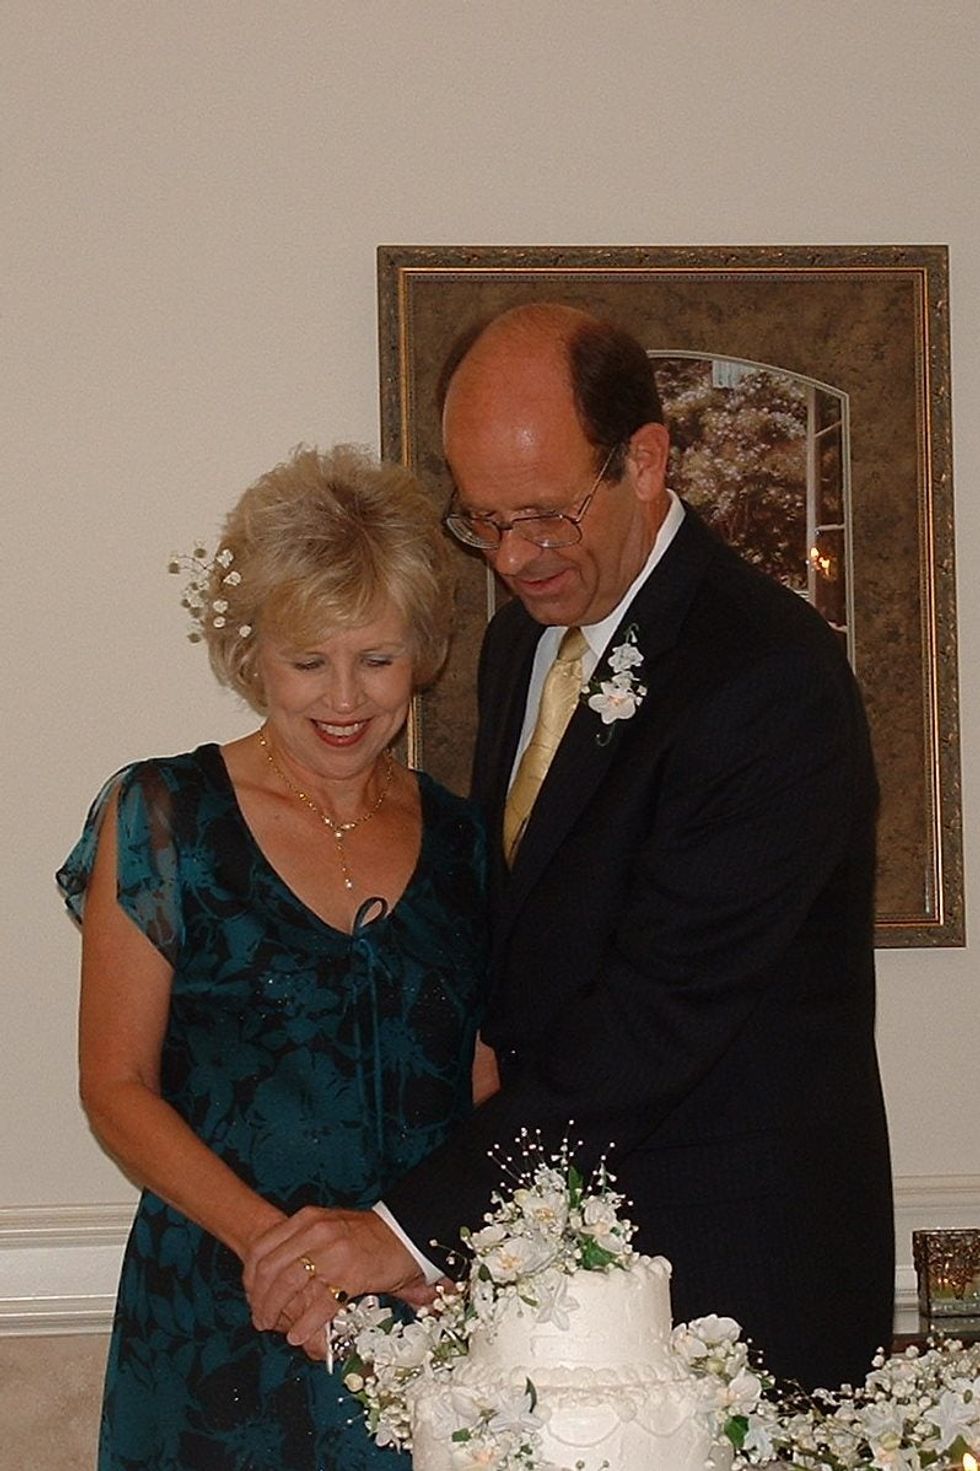 Diane and Nick\u2019s wedding day on September 7 2002. (Nick and Diane Marson/PA)